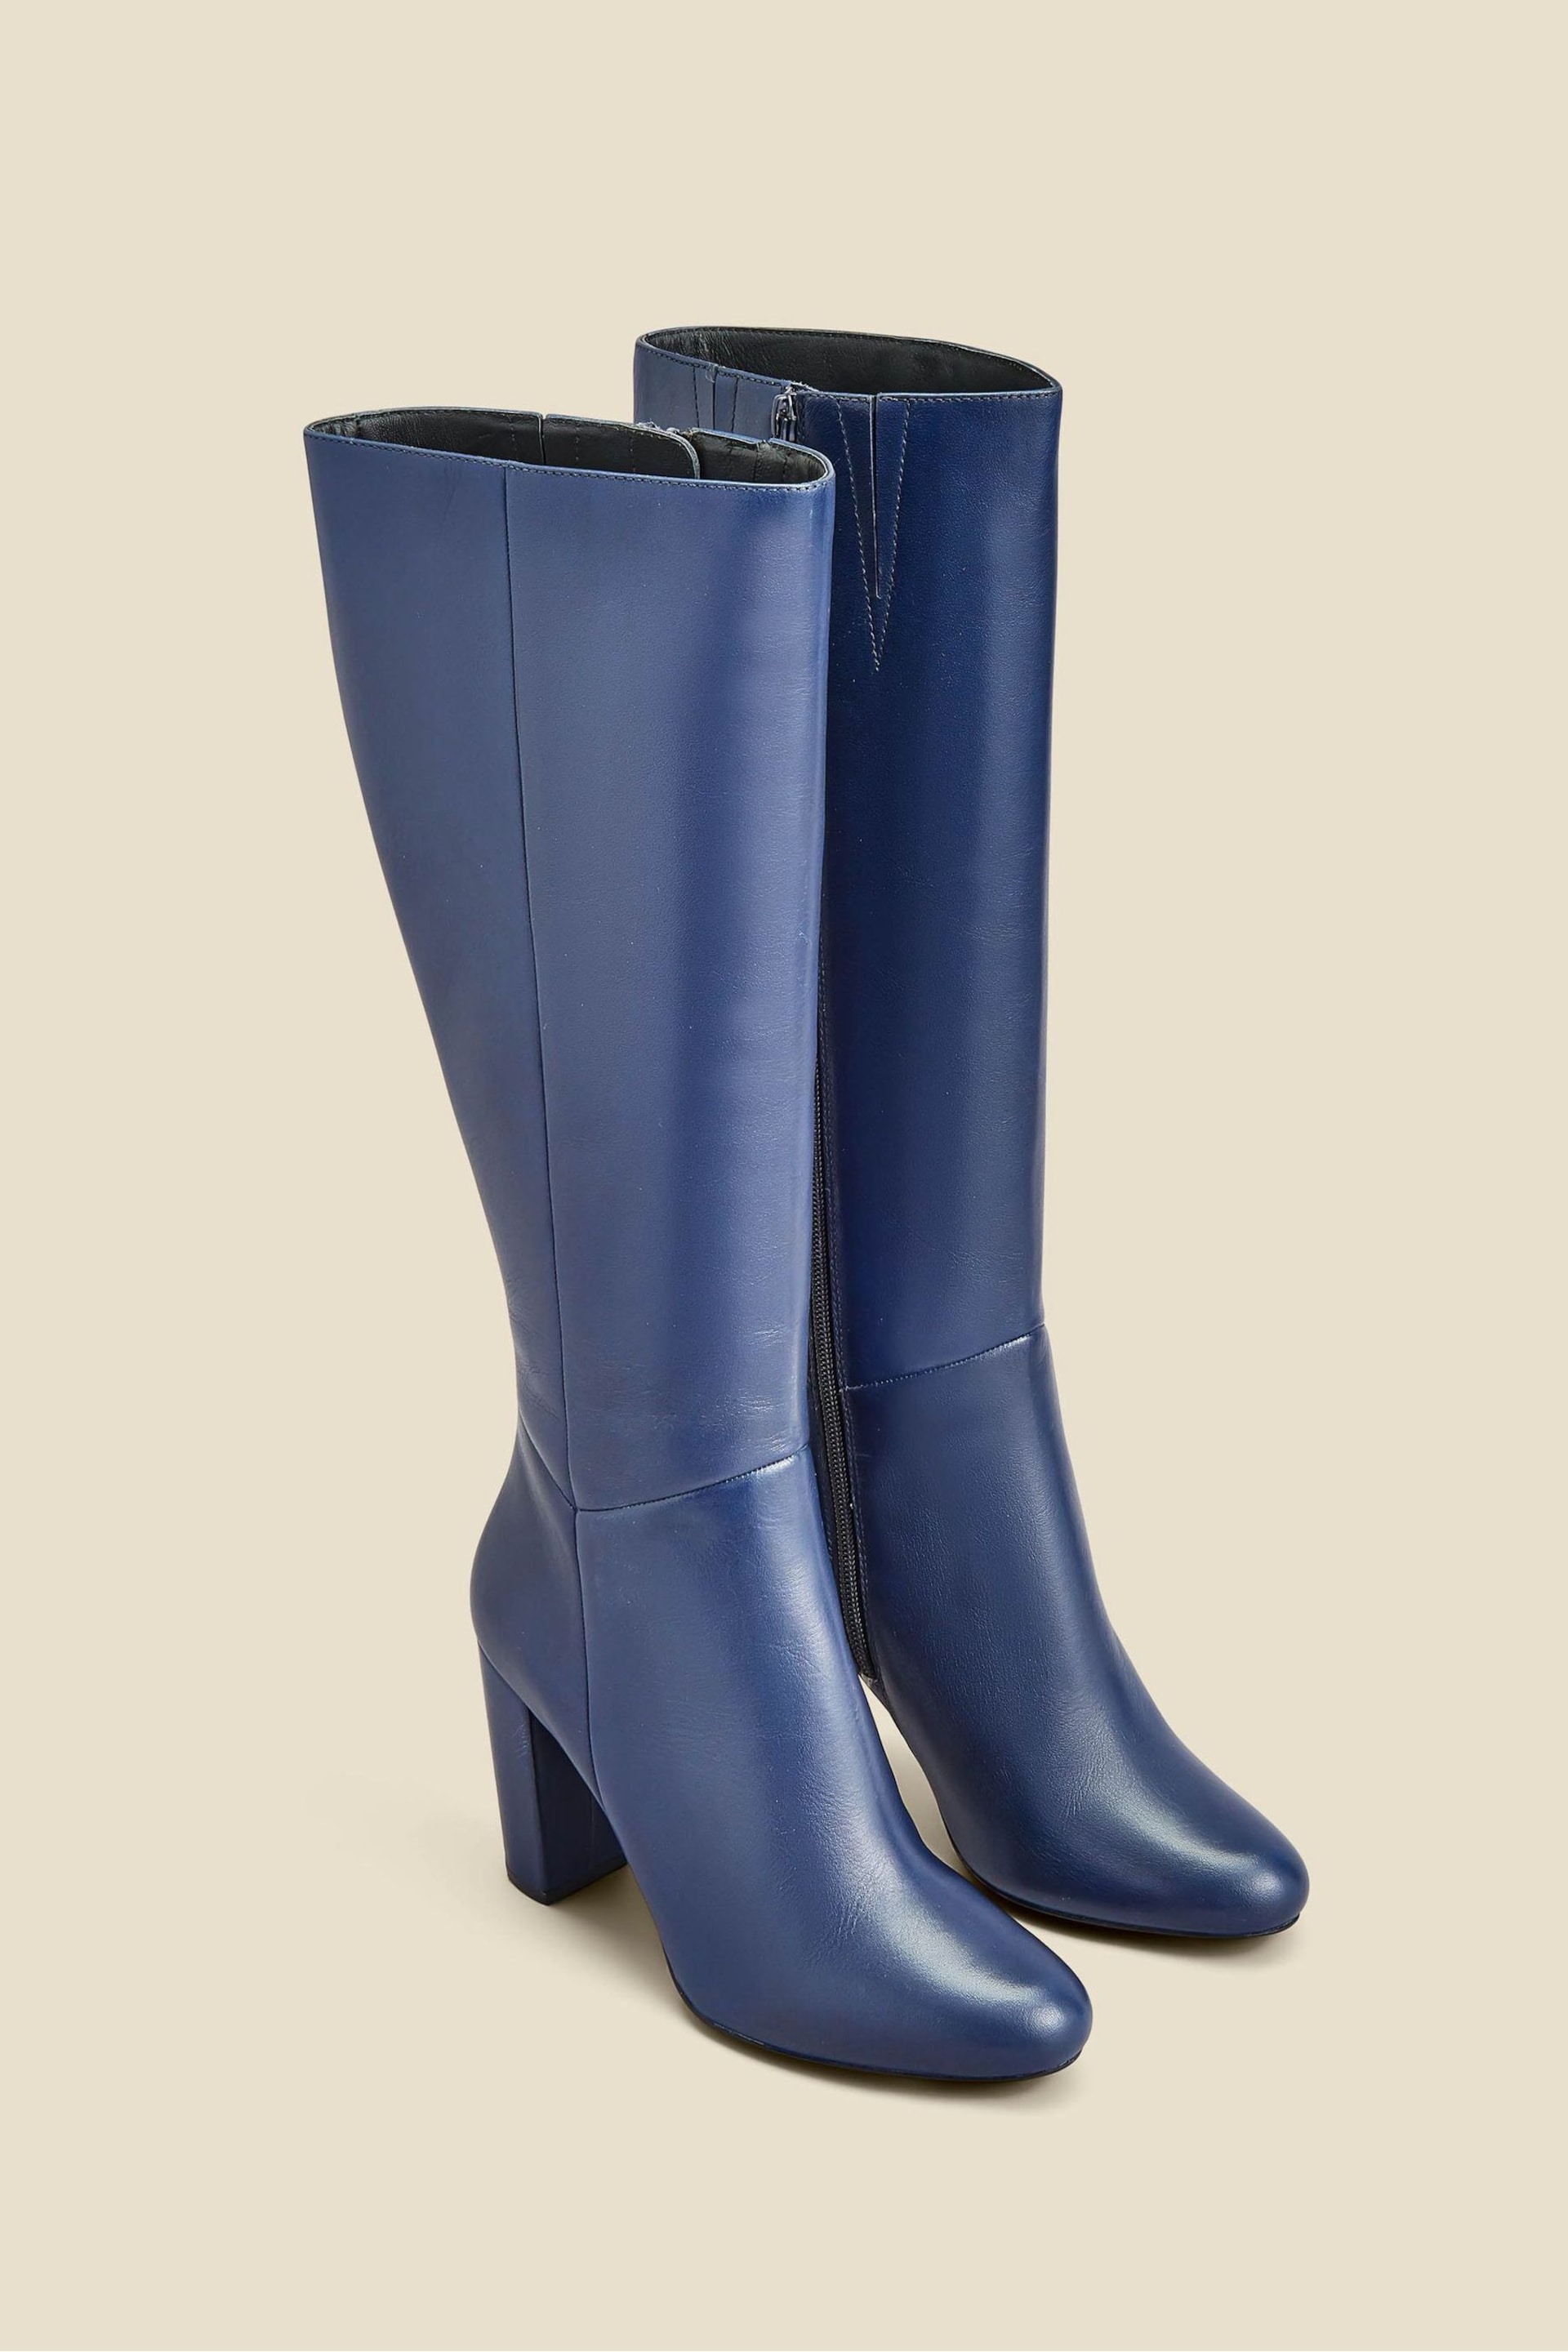 Sosandar Blue Leather Knee High Boots - Image 2 of 4